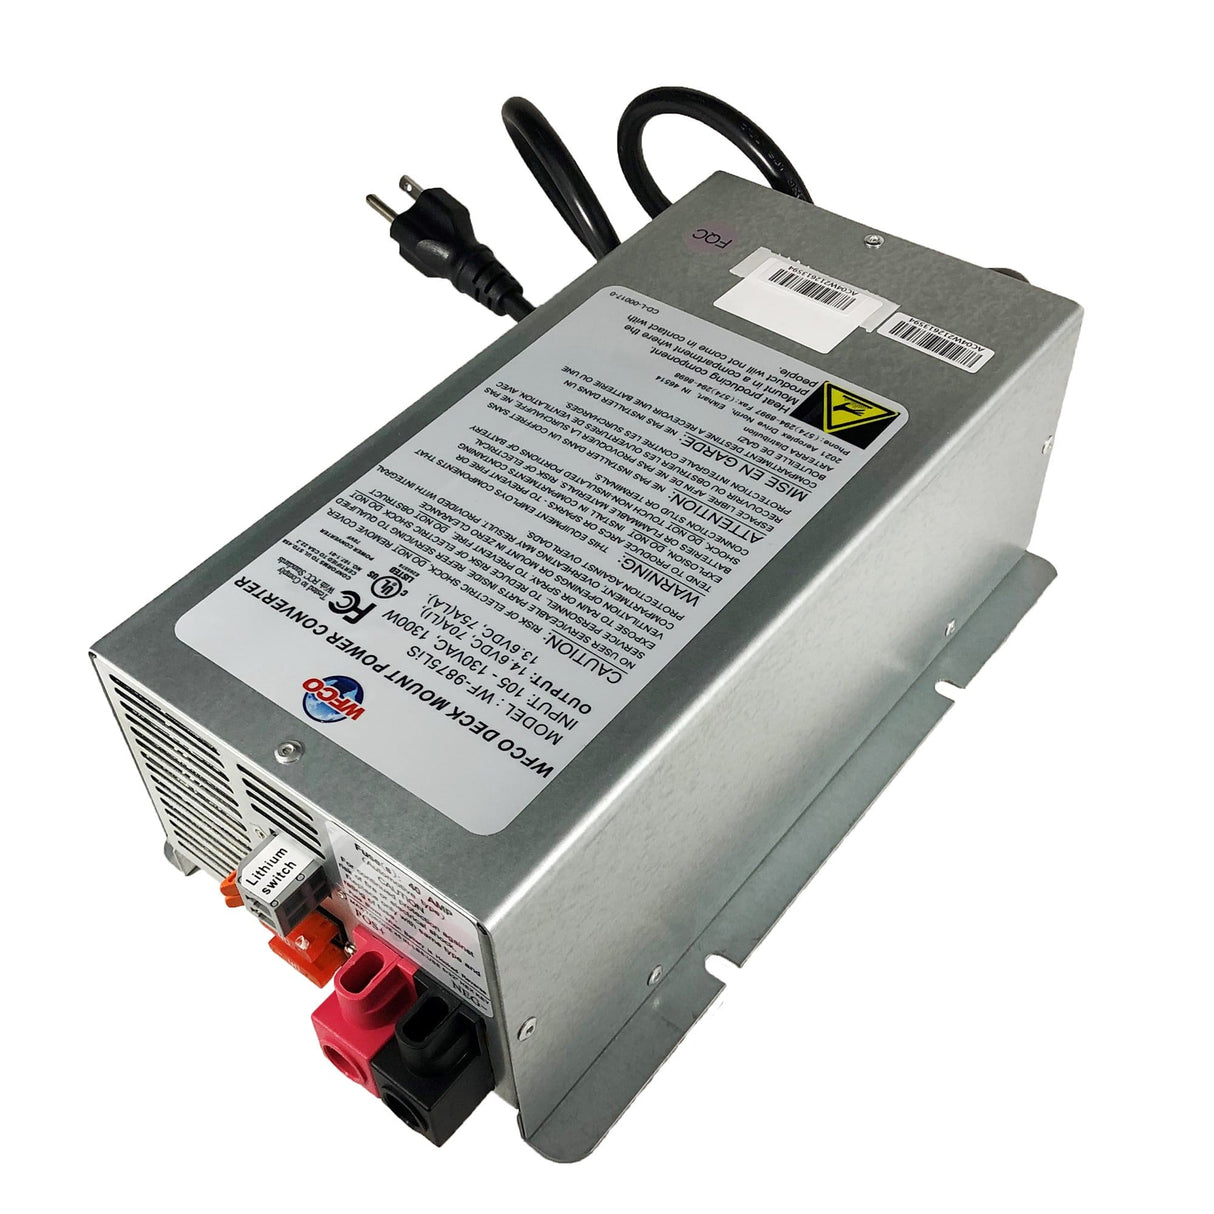 WF-9875-LIS 75A Lithium Switch Converter